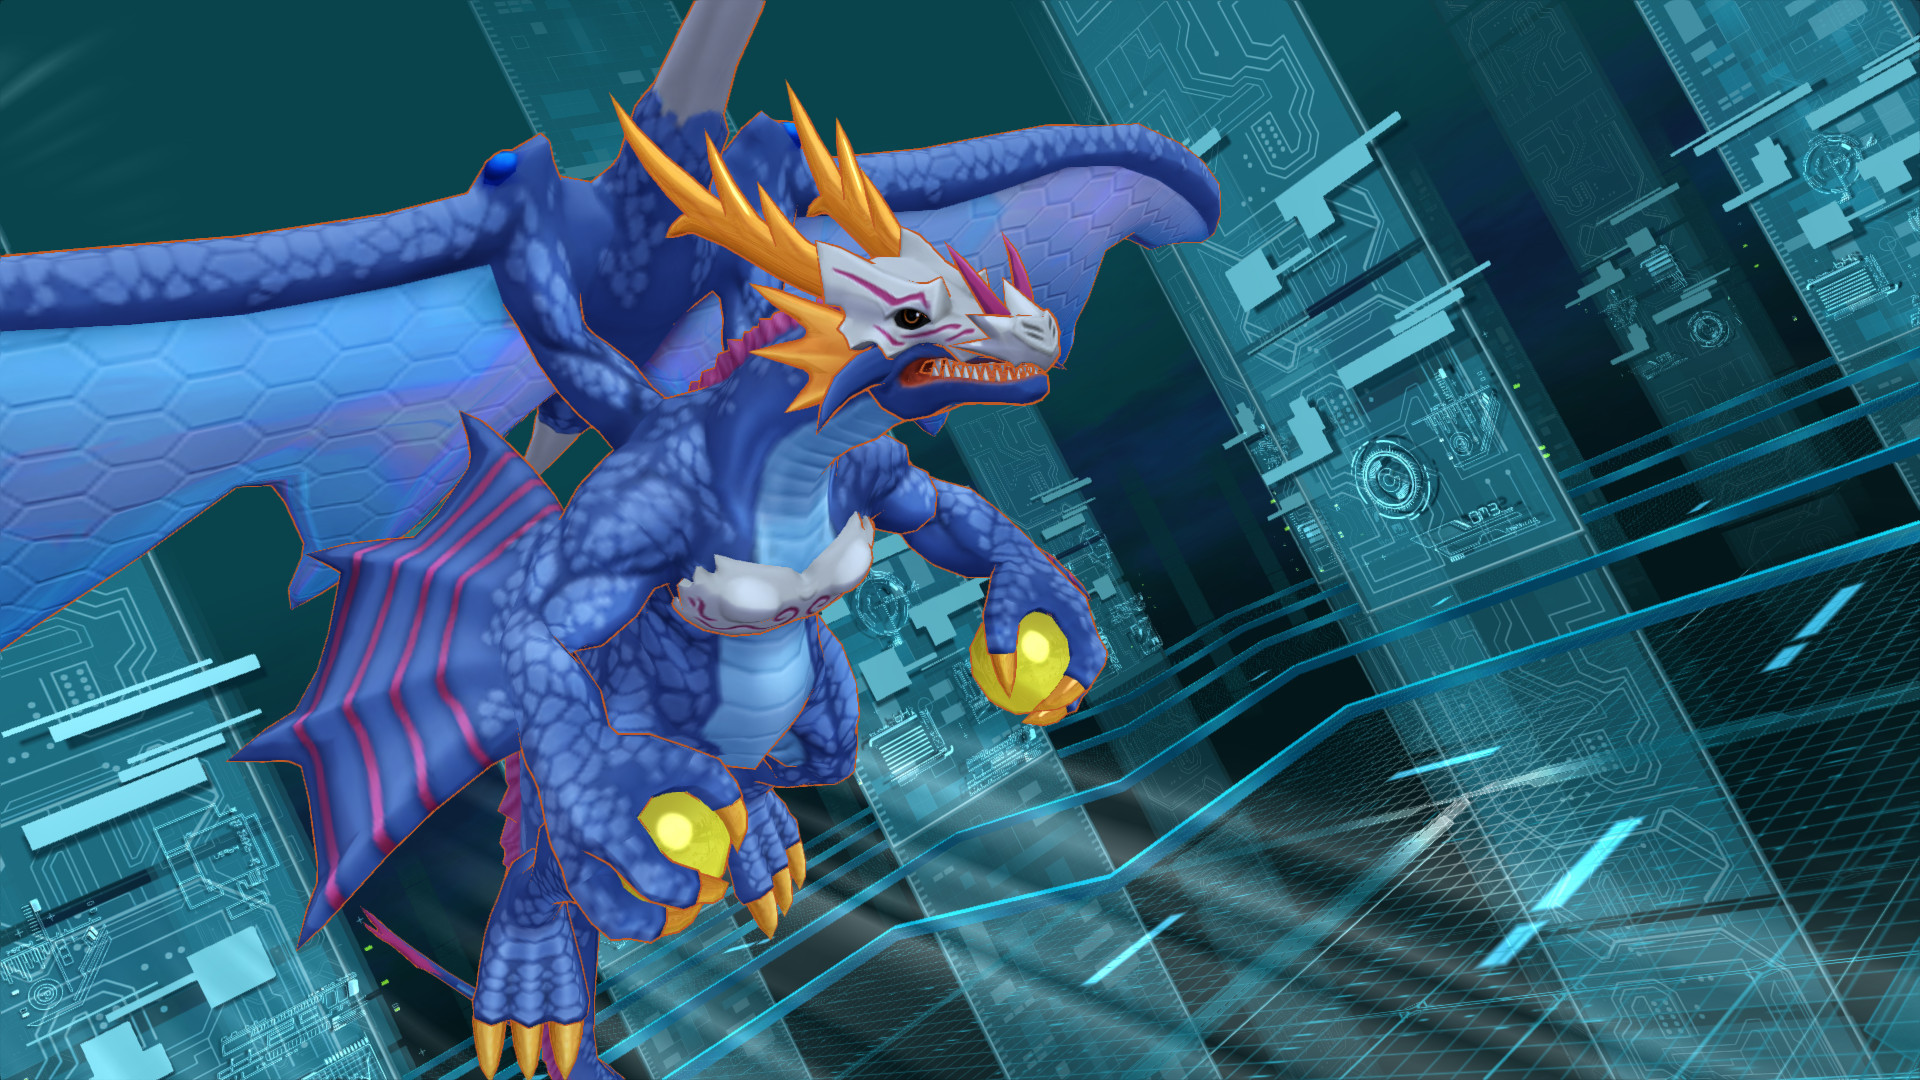 Dragon sleuth brittany. Дигимоны игра 2020. Digimon story: Cyber Sleuth. Digimon картинки. Digimon digitlна андроид.